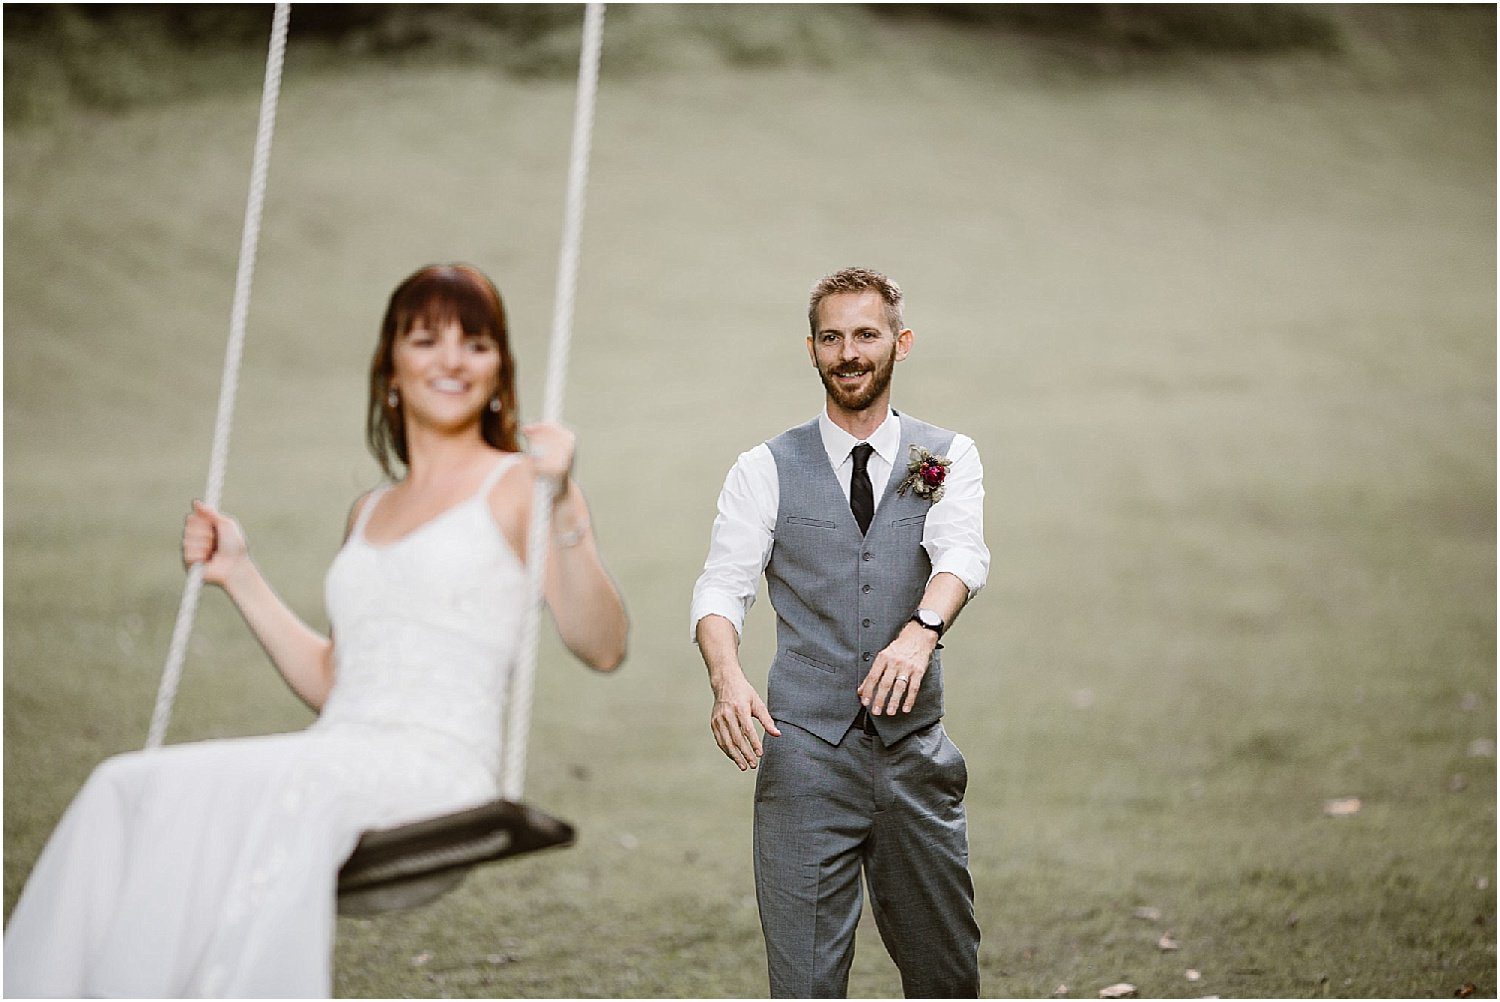 Groom pushing bride on swing on wedding day